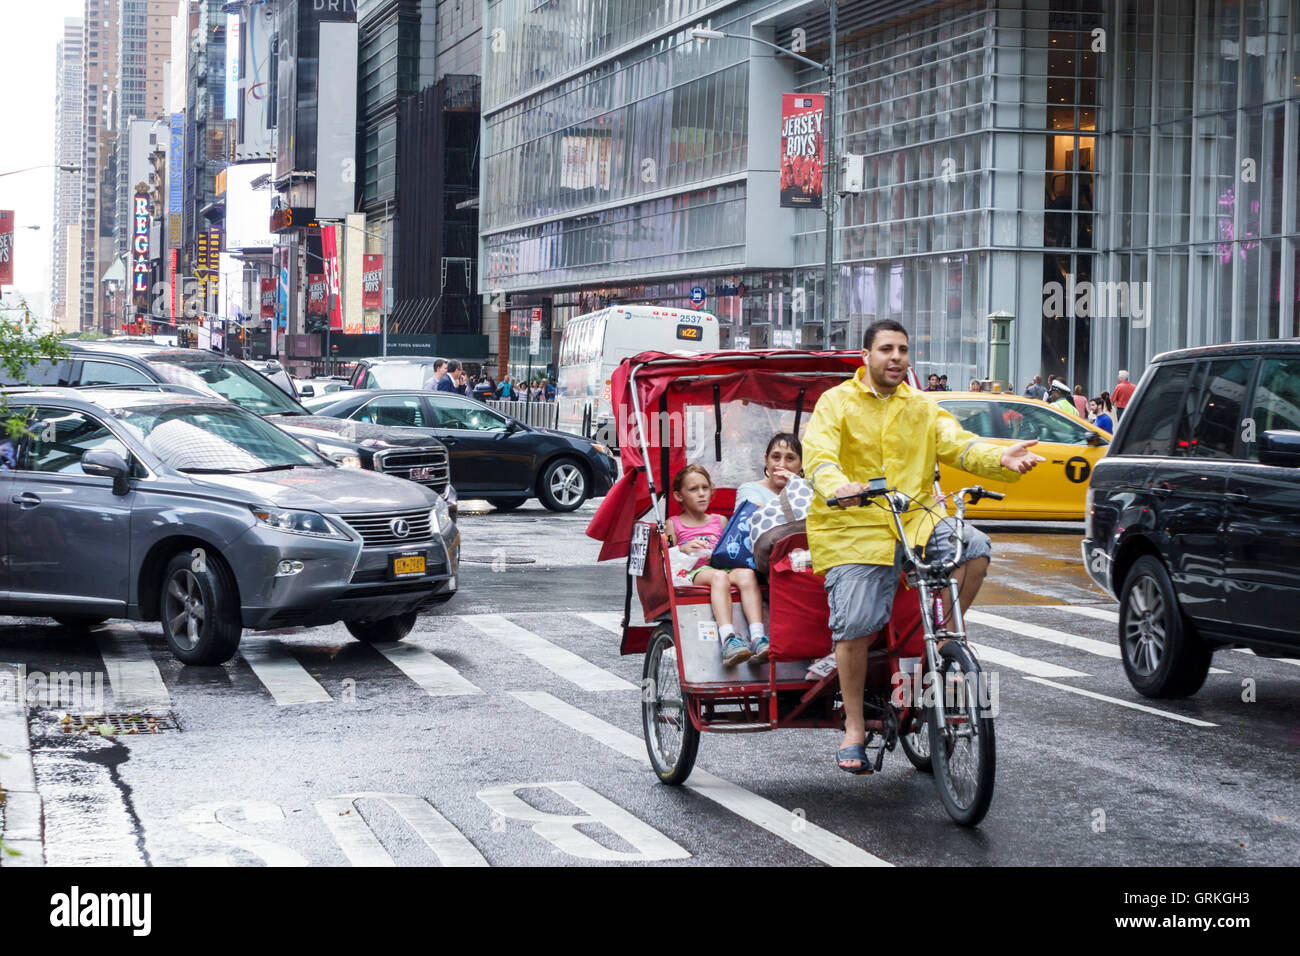 New York City,NY NYC Manhattan,Midtown,42 Street,traffic,intersection,car,pedicab,cycle rickshaw,adult,adults,man men male,woman female women,girl gir Stock Photo